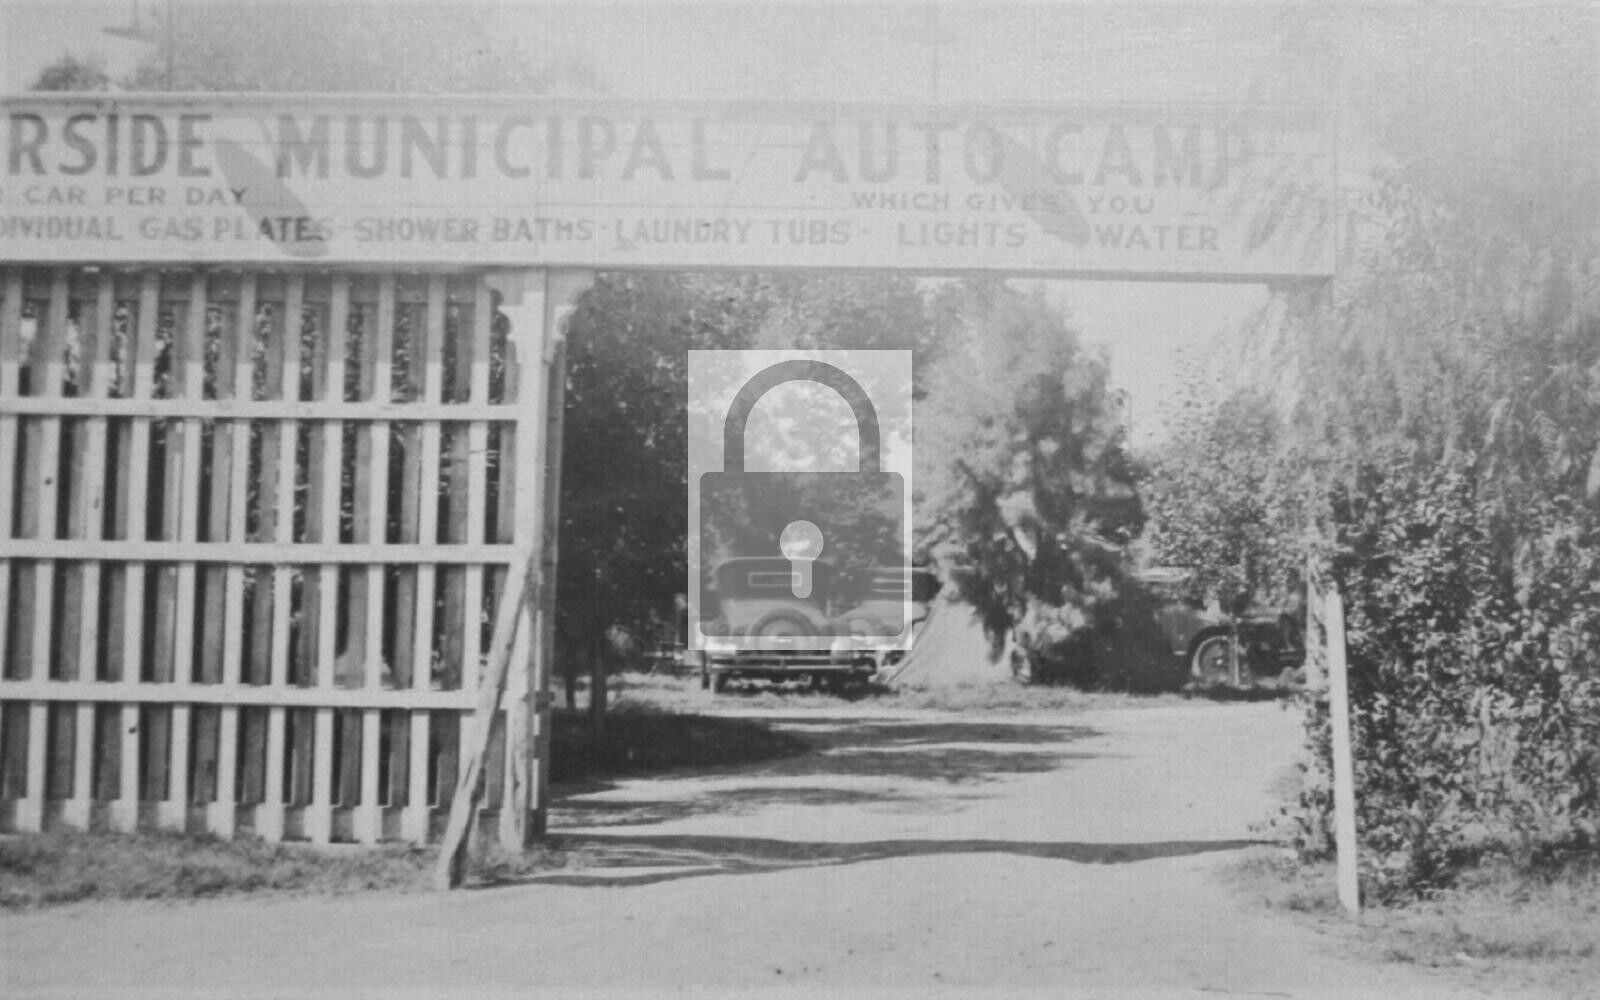 Riverside Municipal Auto Camp Entrance California CA Reprint Postcard